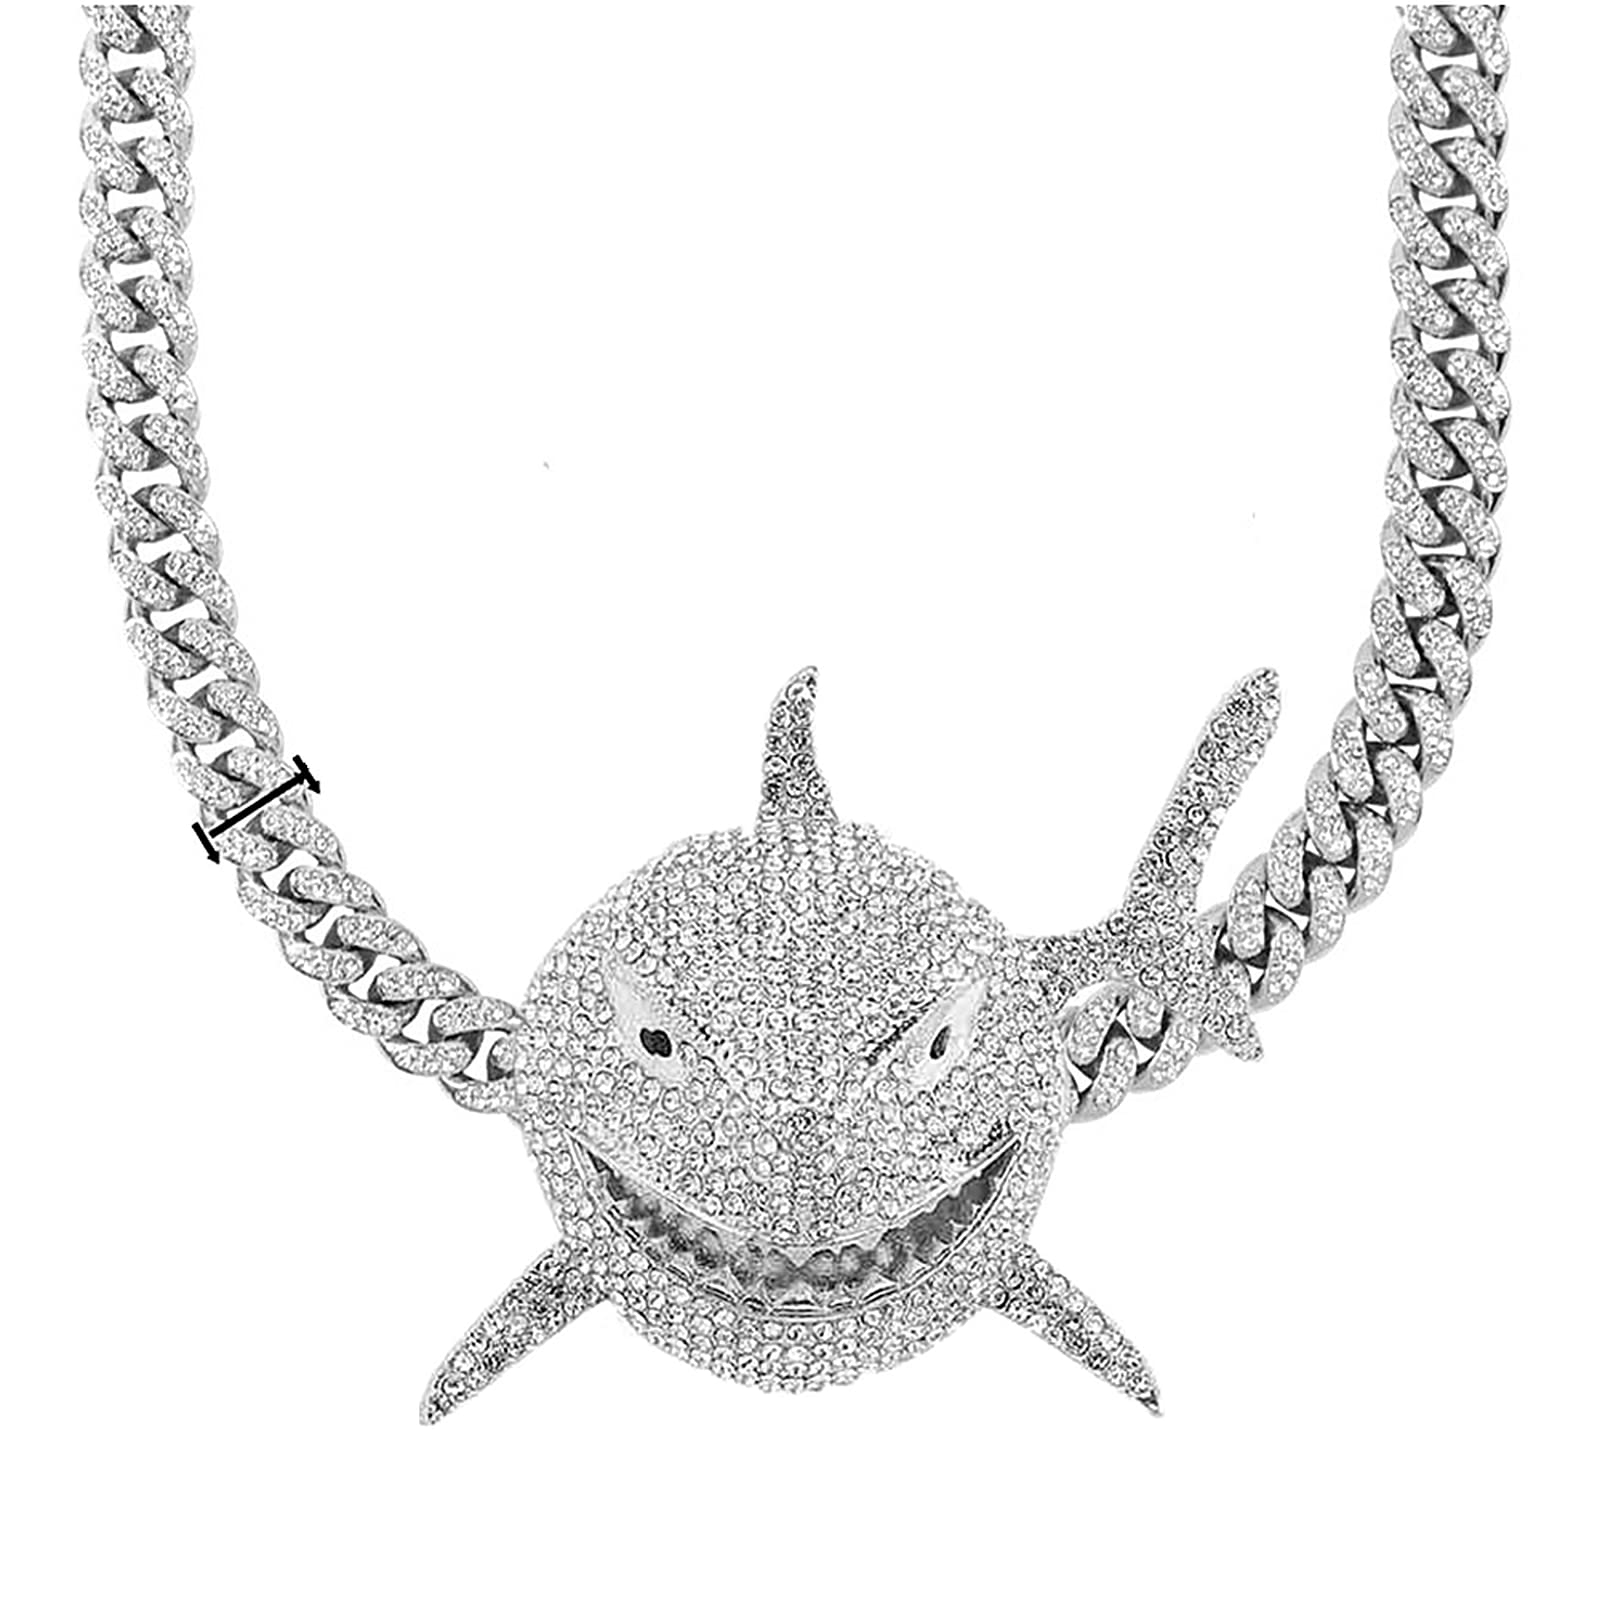 2Ct Round Cut Blue & White Diamond Shark Pendant 14K White Gold Over Free  Chain | eBay